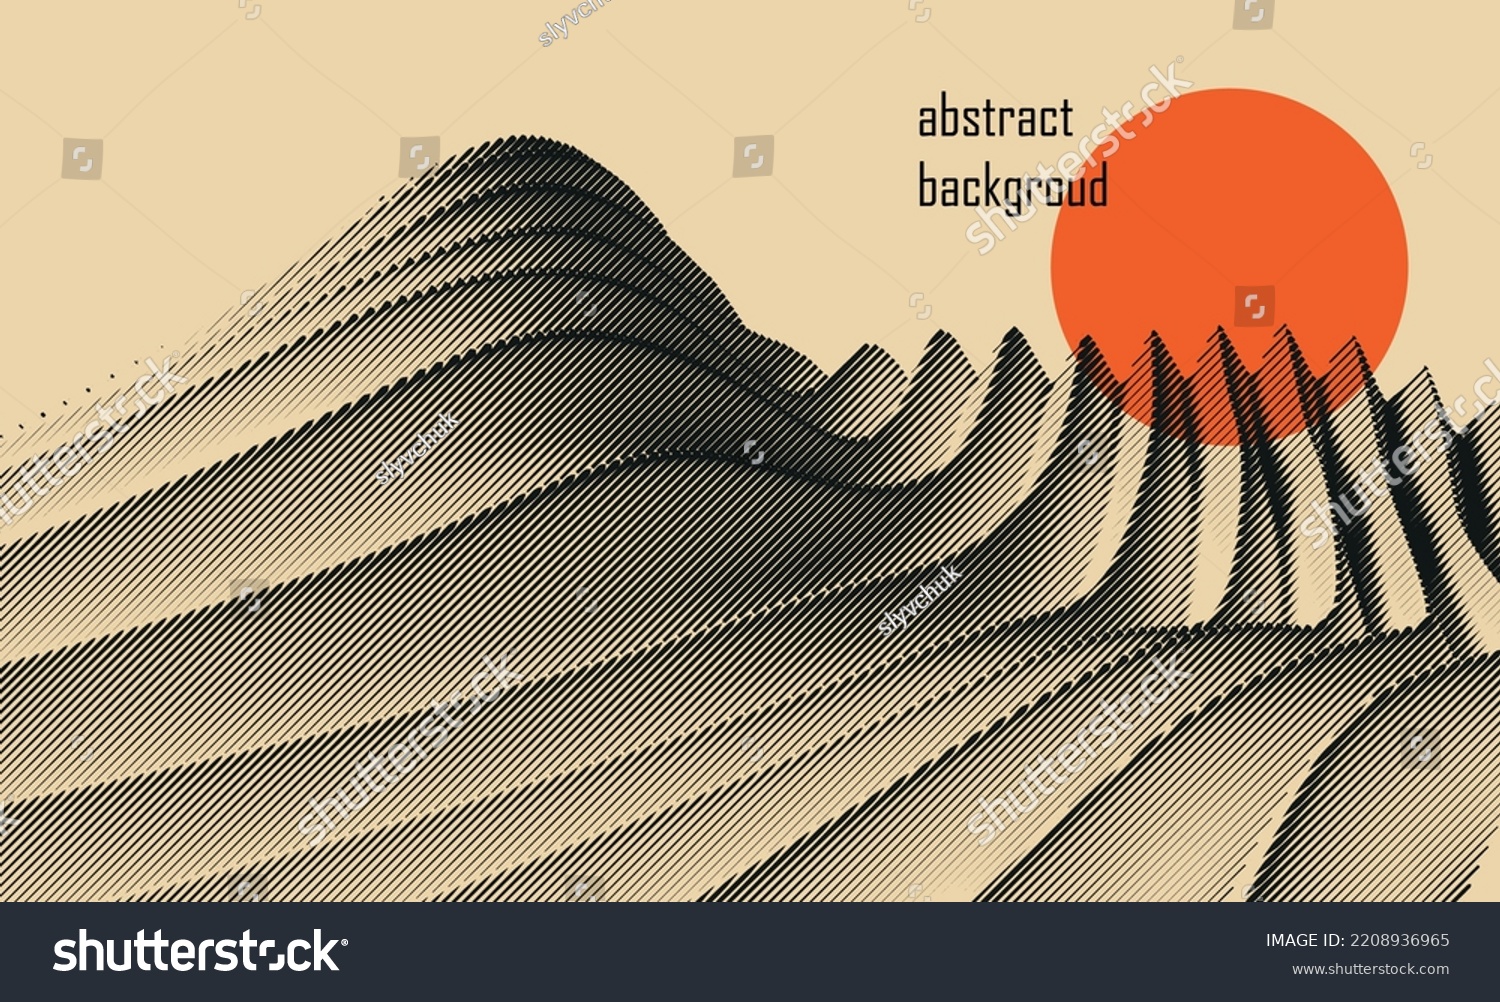 SVG of Elegant background with curved wave lines. Sand dunes. Background with optical illusion. Vector illustration svg